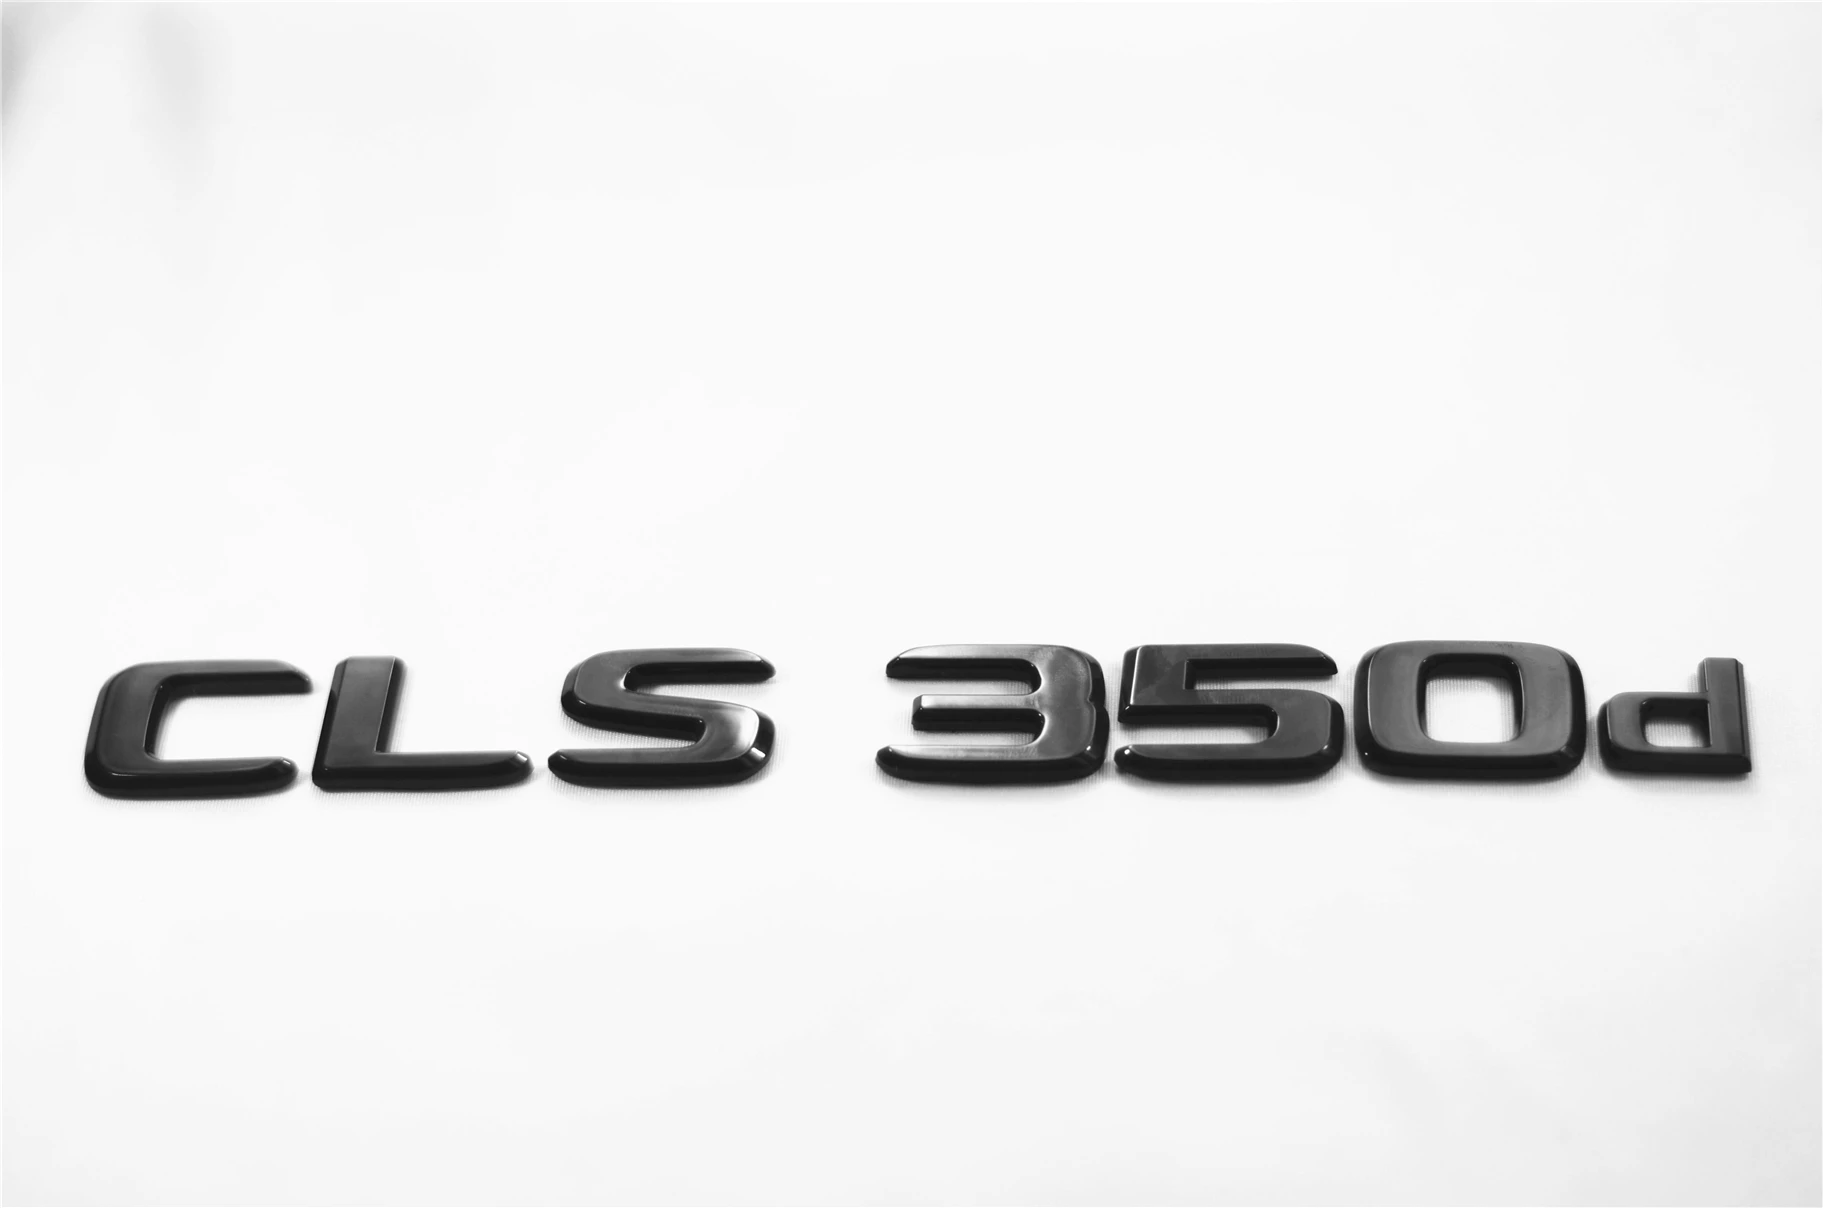 Emblem Značko Prtljažnik Zadaj ABS za Mercedes Benz CLS350d CLS400d CLS450d CLS300d CLS220d Črni Avto Zunanjost Nalepke za Dekoracijo